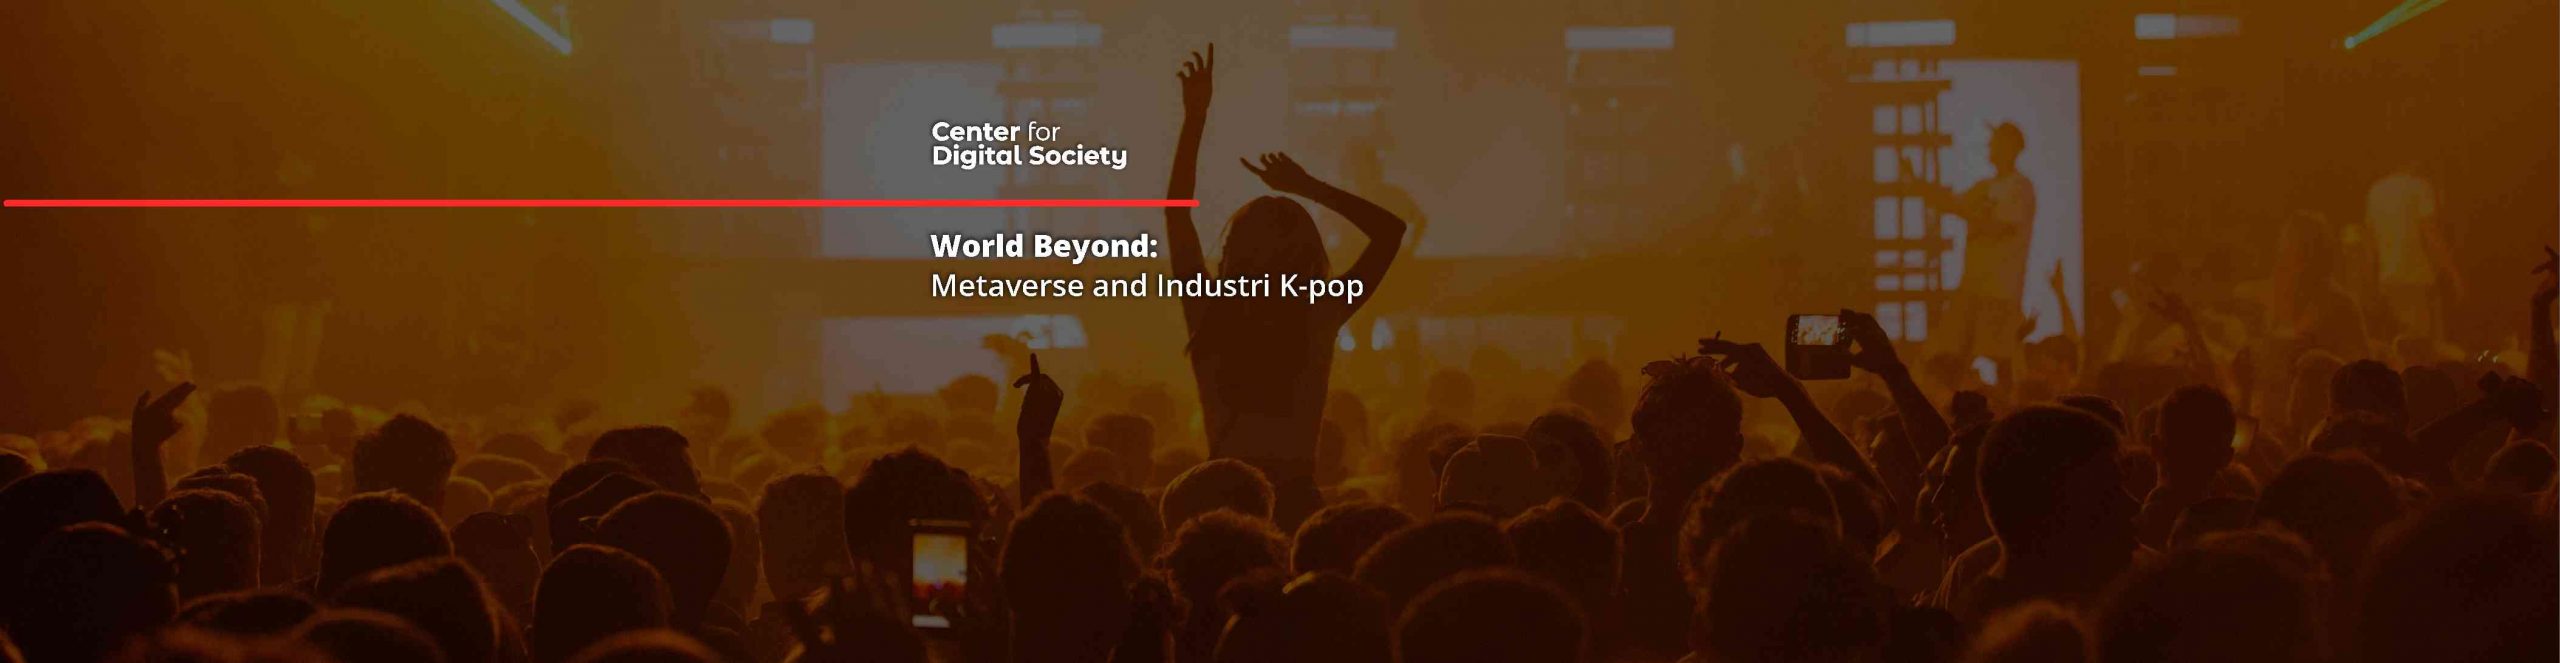 A World Beyond: Metaverse dan Industri K-pop